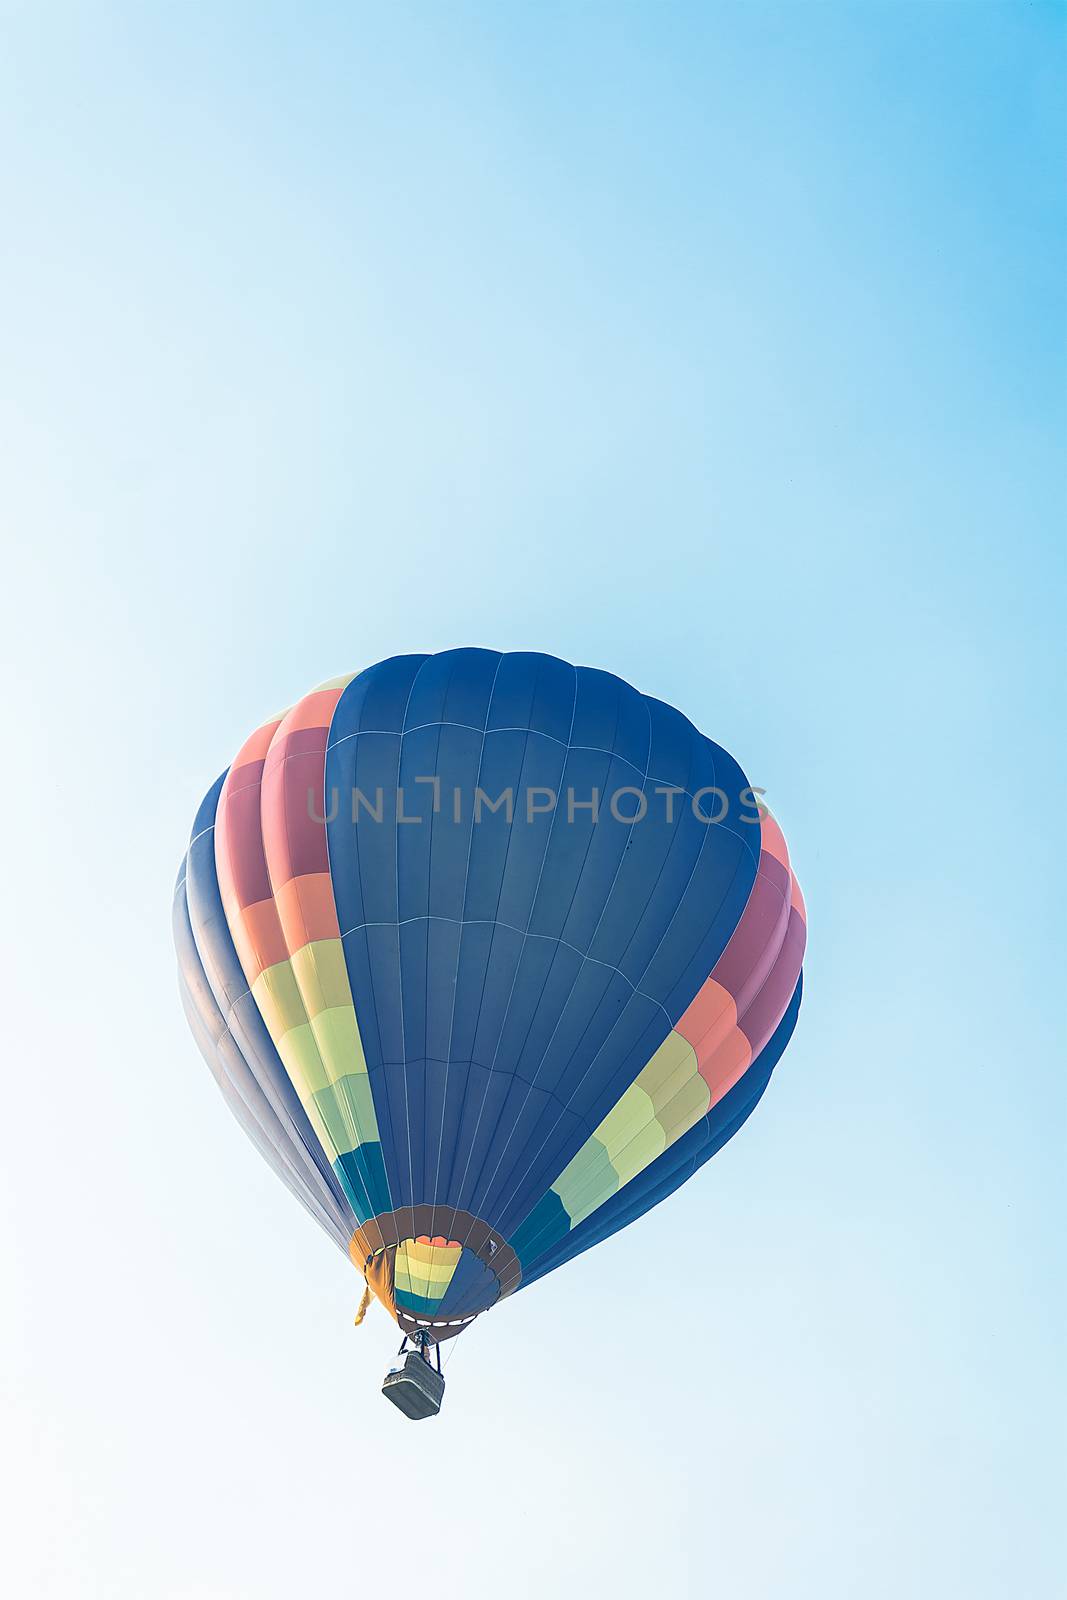 Hot balloon flying in the blue sky by rakoptonLPN